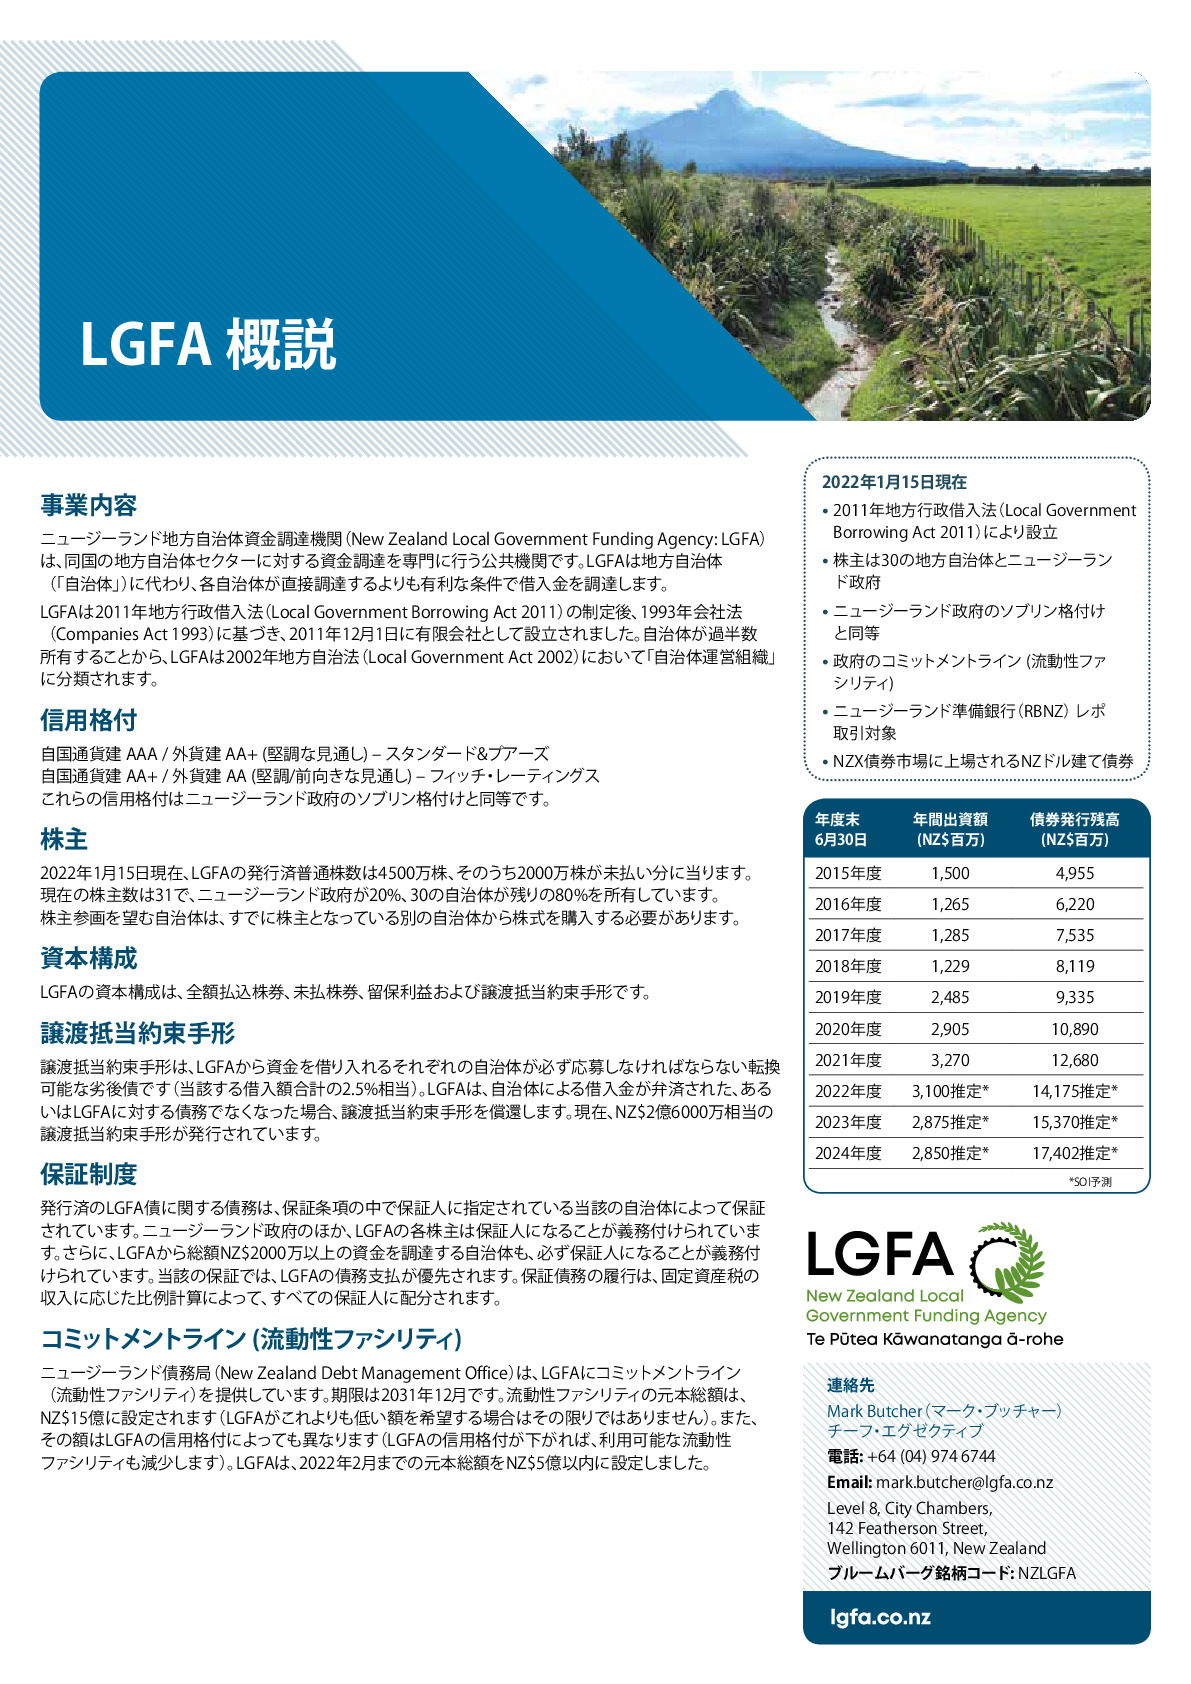 LGFA_Overview_Jan22 - Japanese